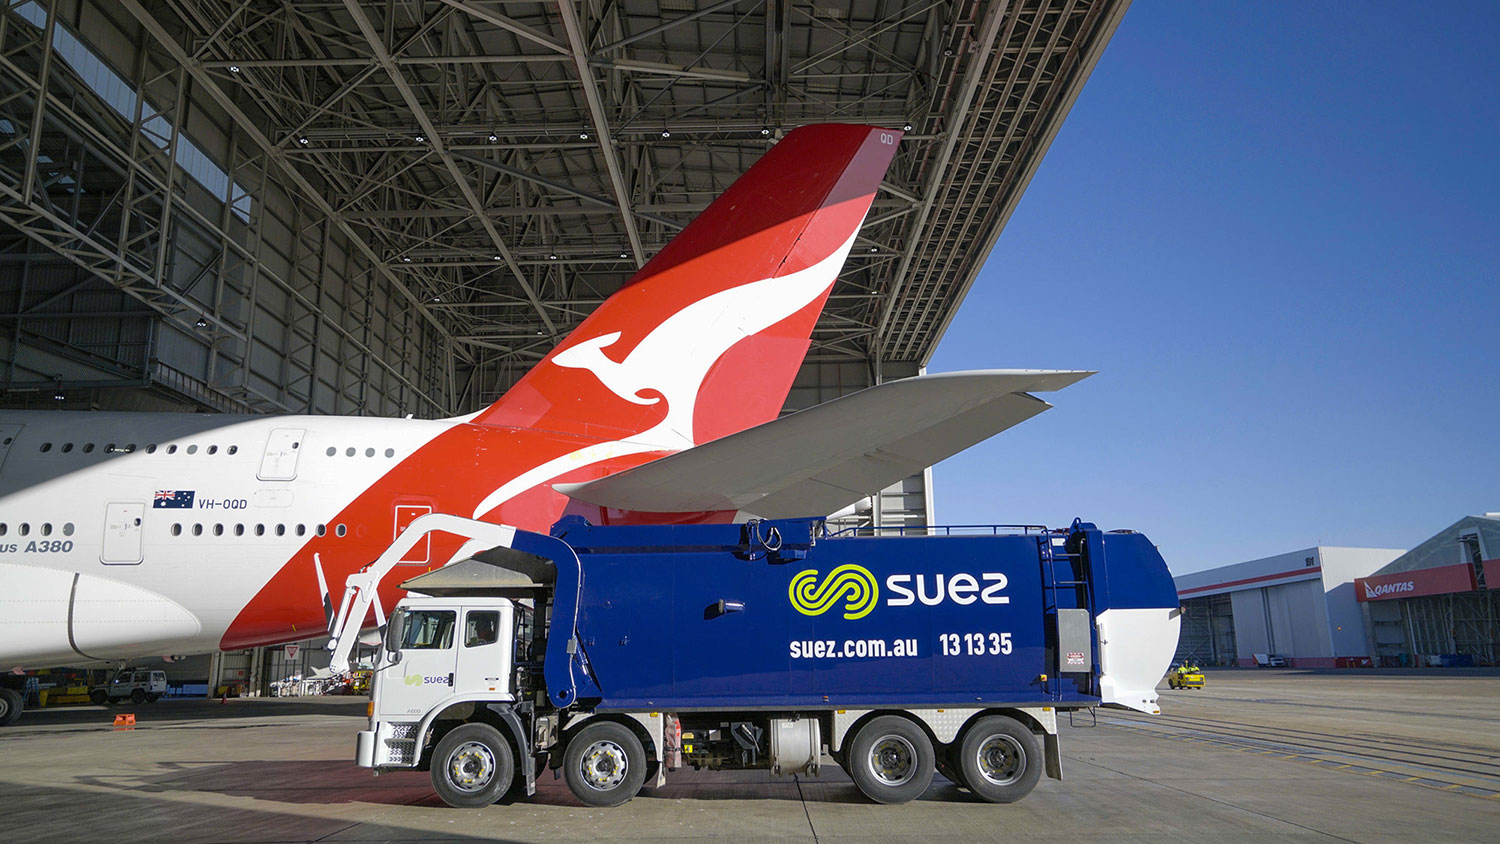 Qantas airline company